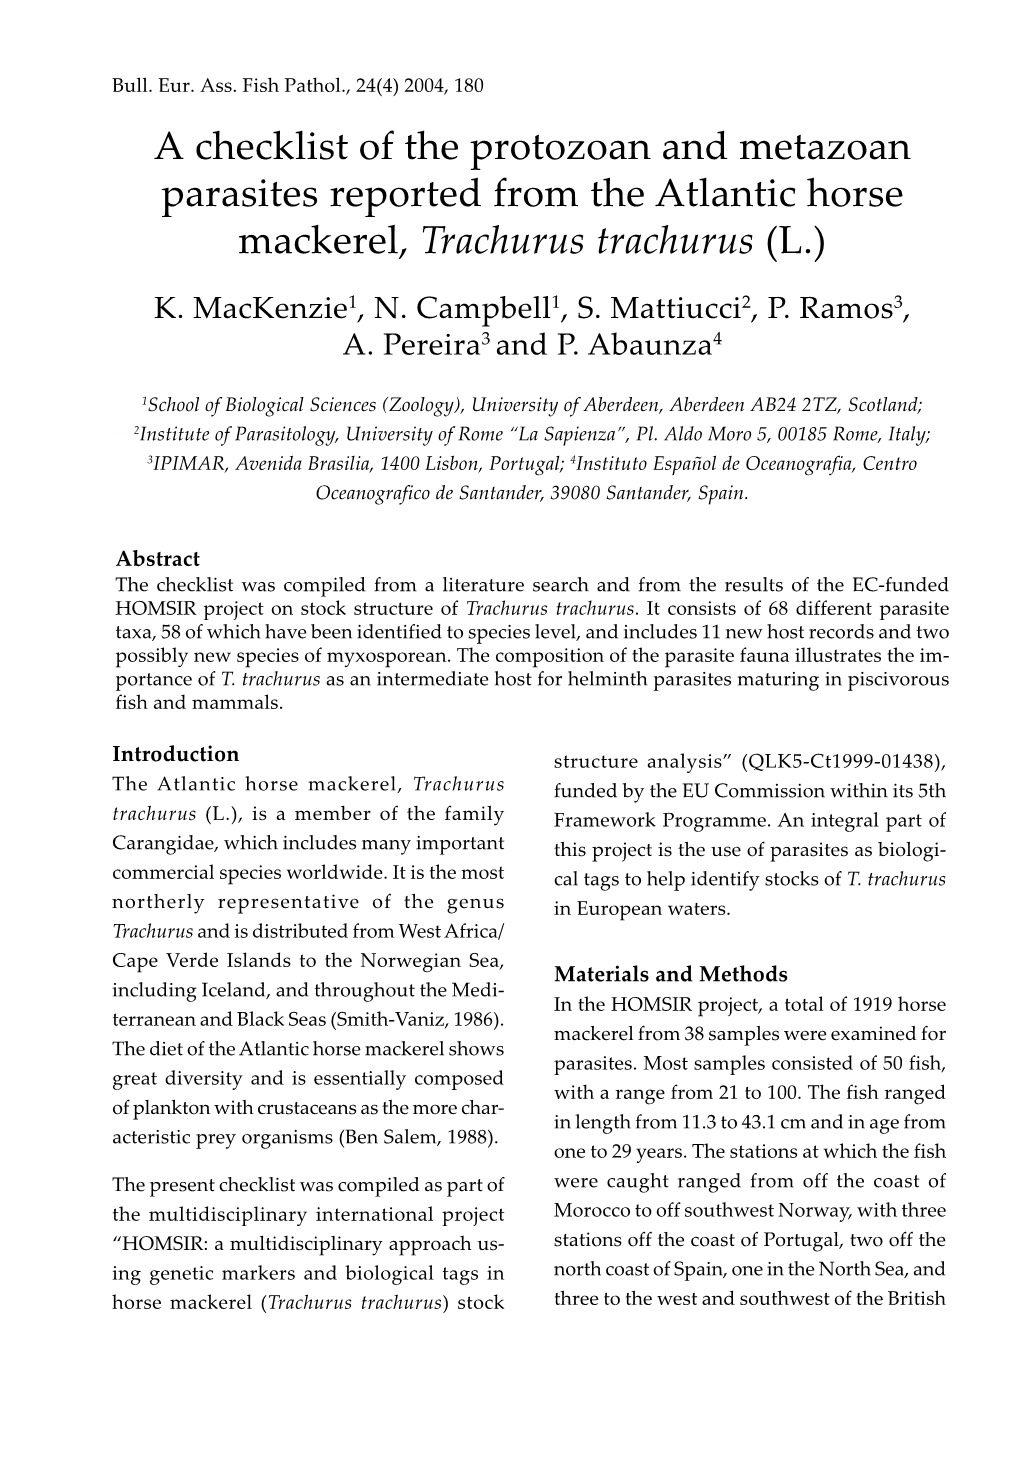 A Checklist of the Protozoan and Metazoan Parasites Reported from the Atlantic Horse Mackerel, Trachurus Trachurus (L.)